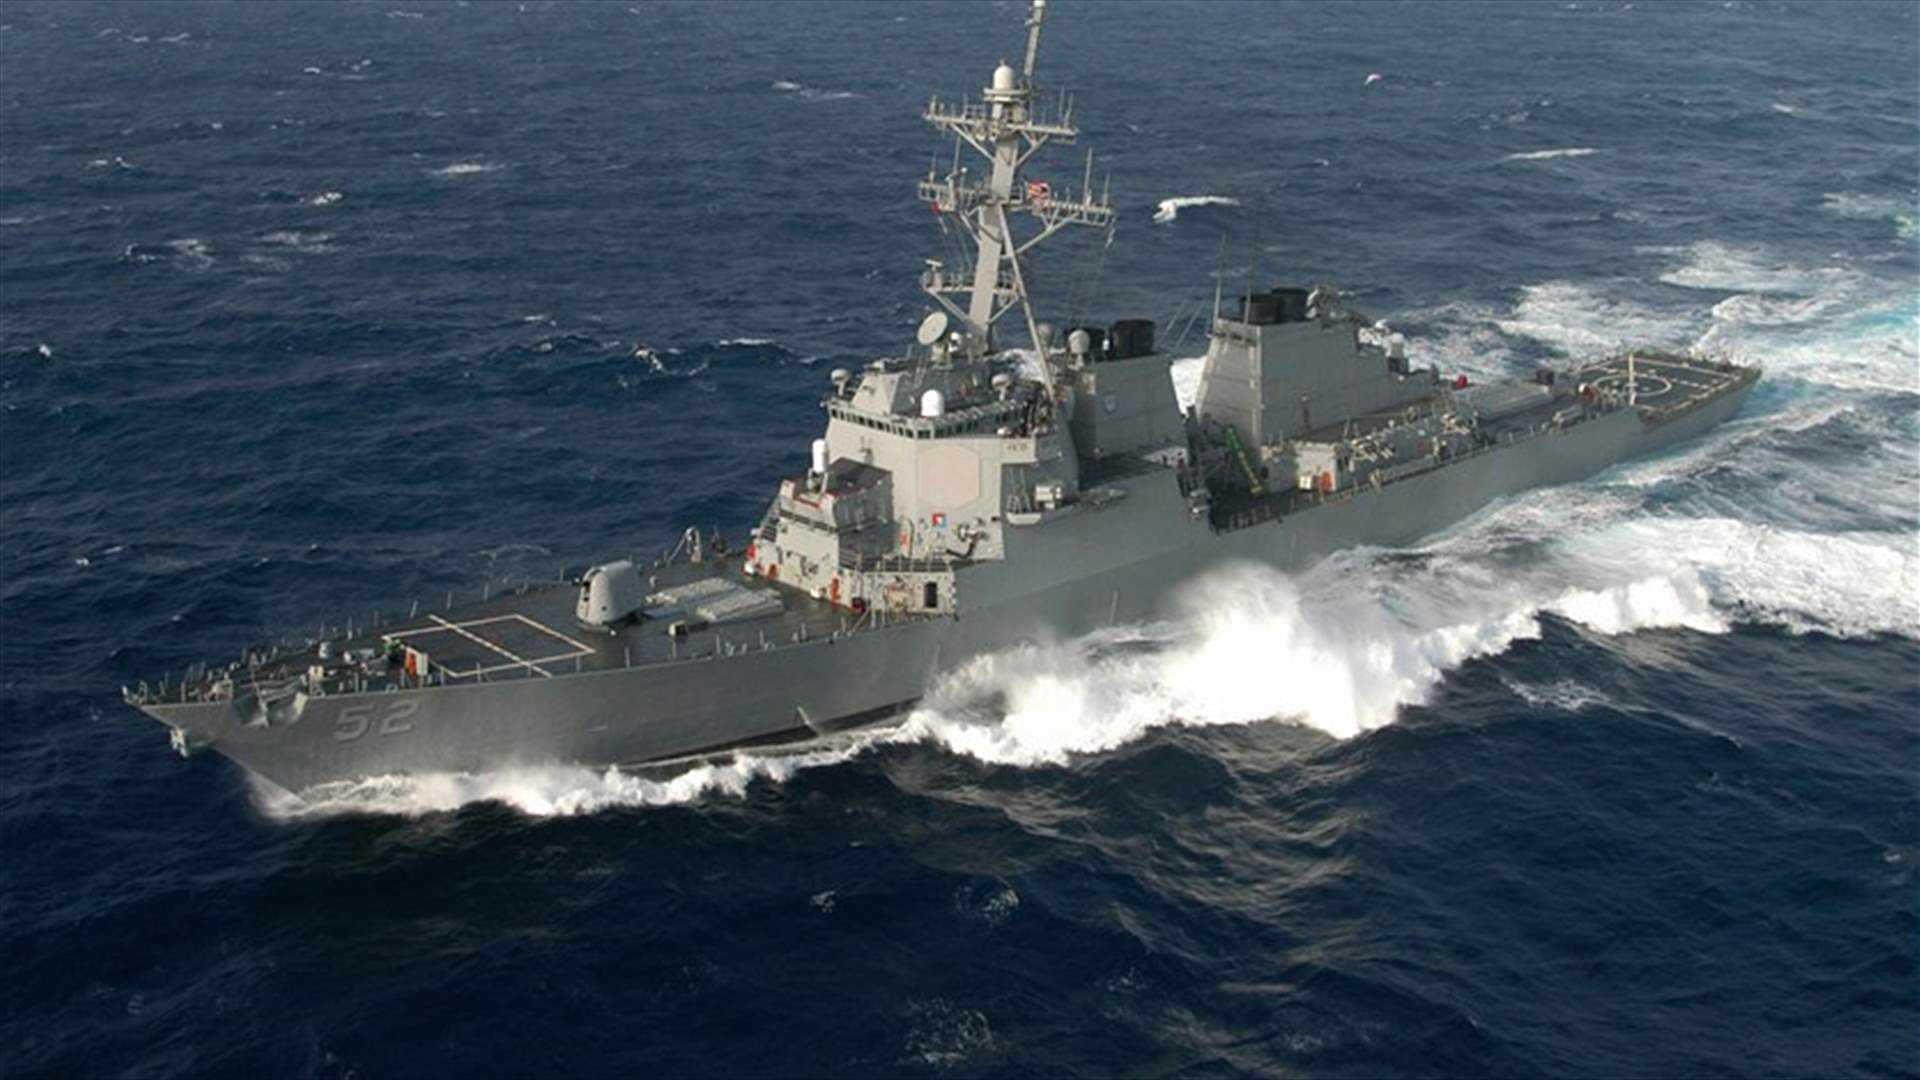 Iran warned a U.S. warship to leave area of Iranian naval drill - Tasnim